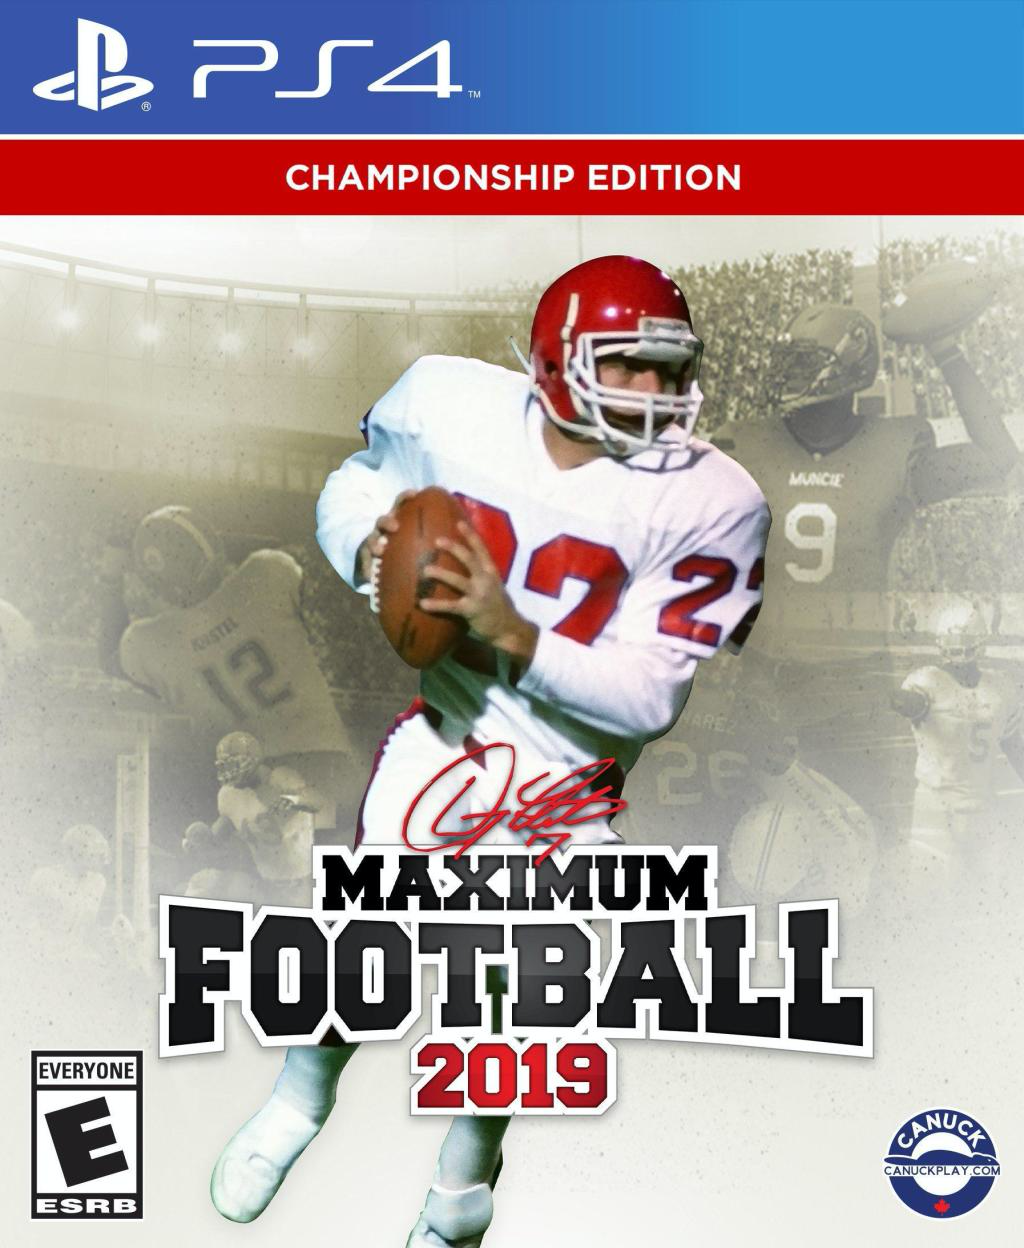 Maximum Football 2019 - Championship Edition - PS4